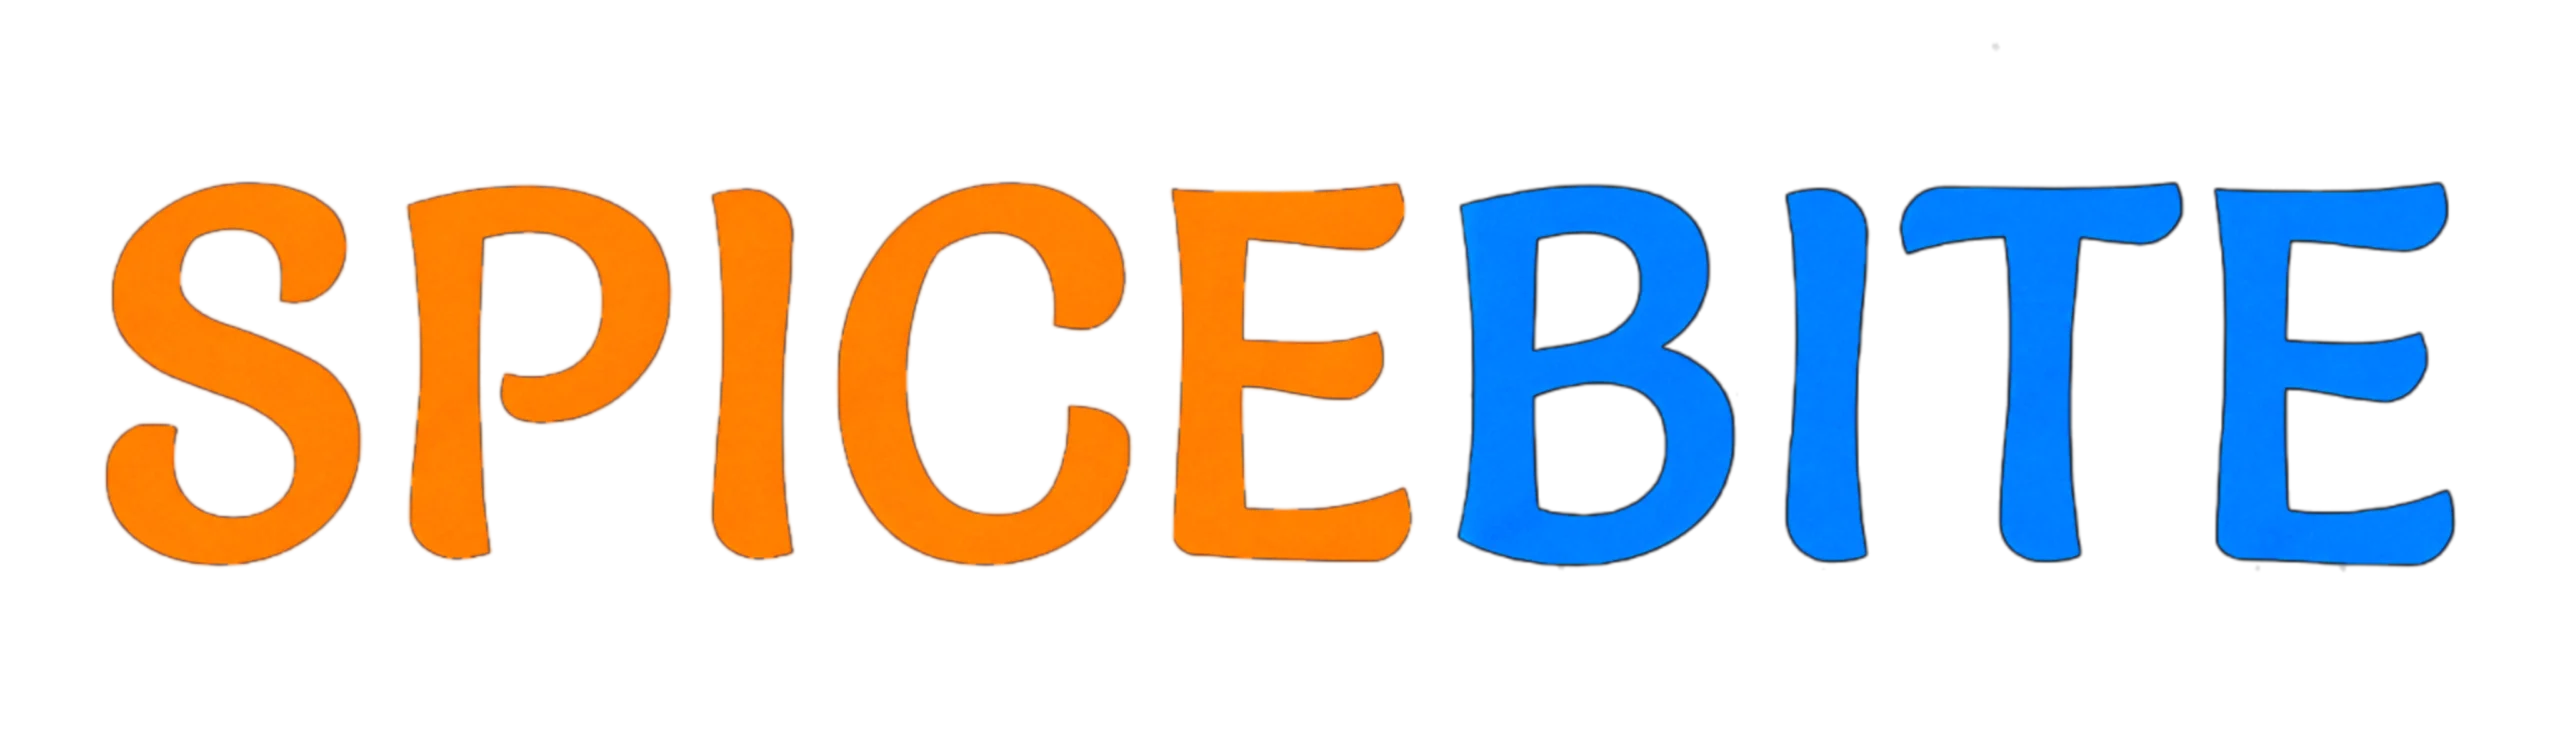 spicebite site logo updated